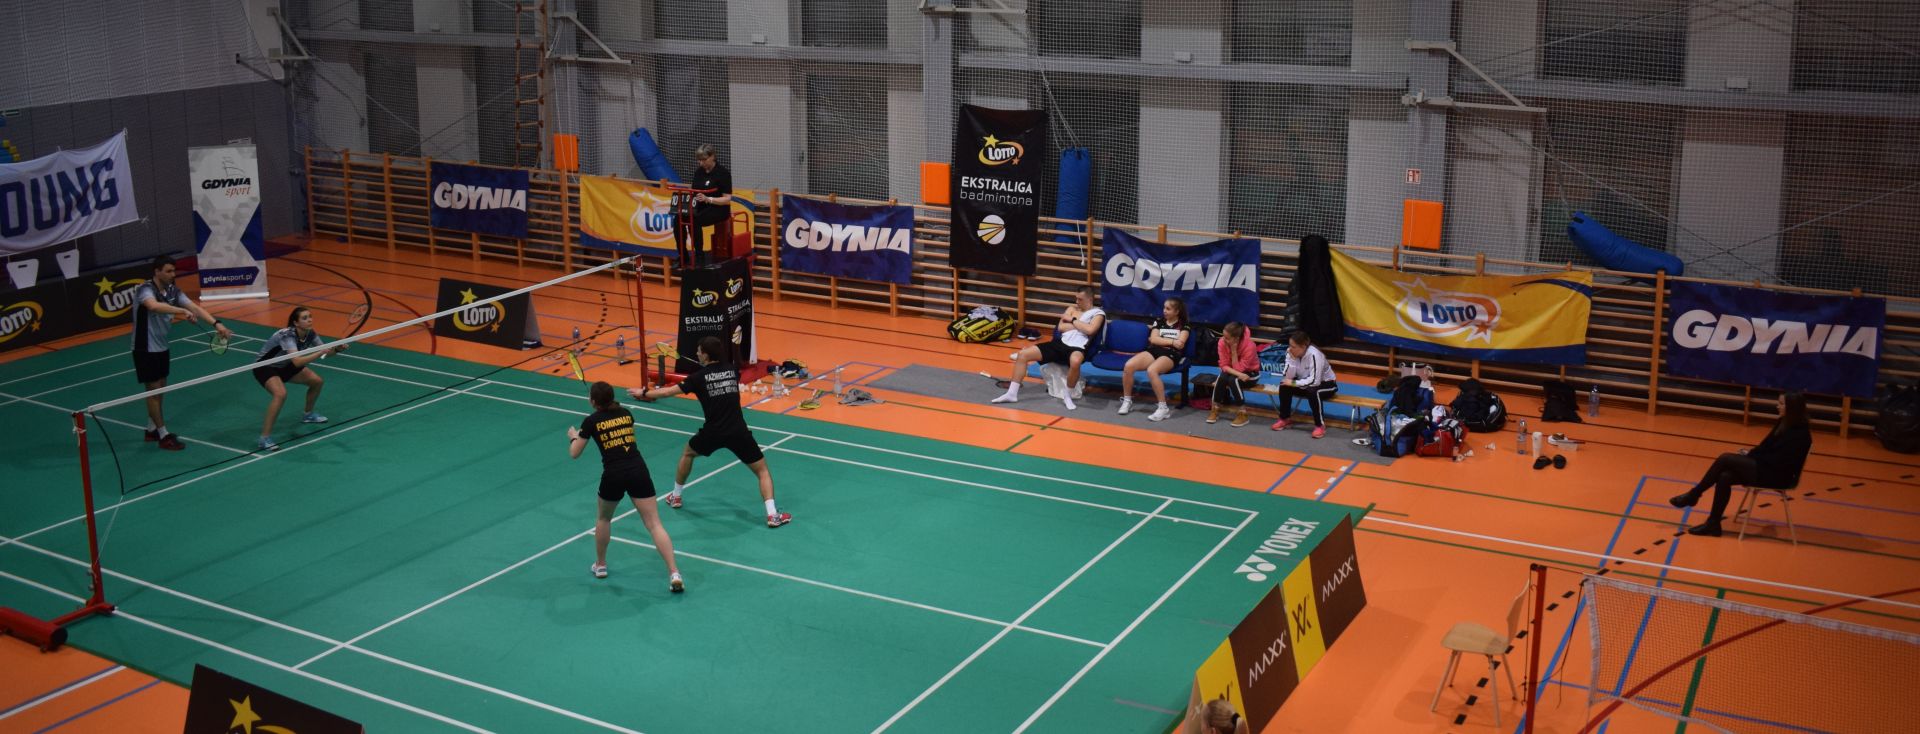 Klub Sportowy Badminton School 